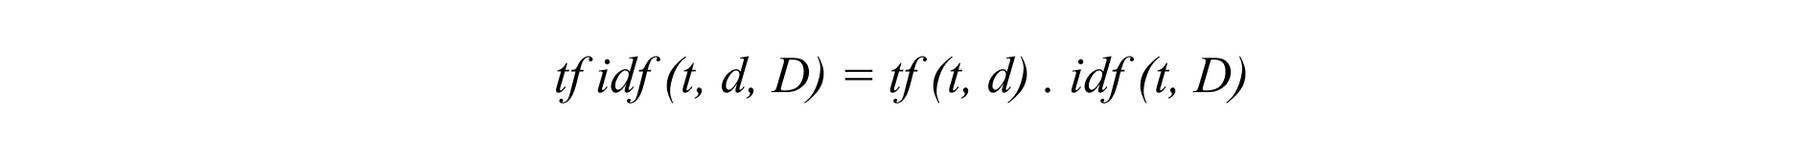 TF-IDF formula